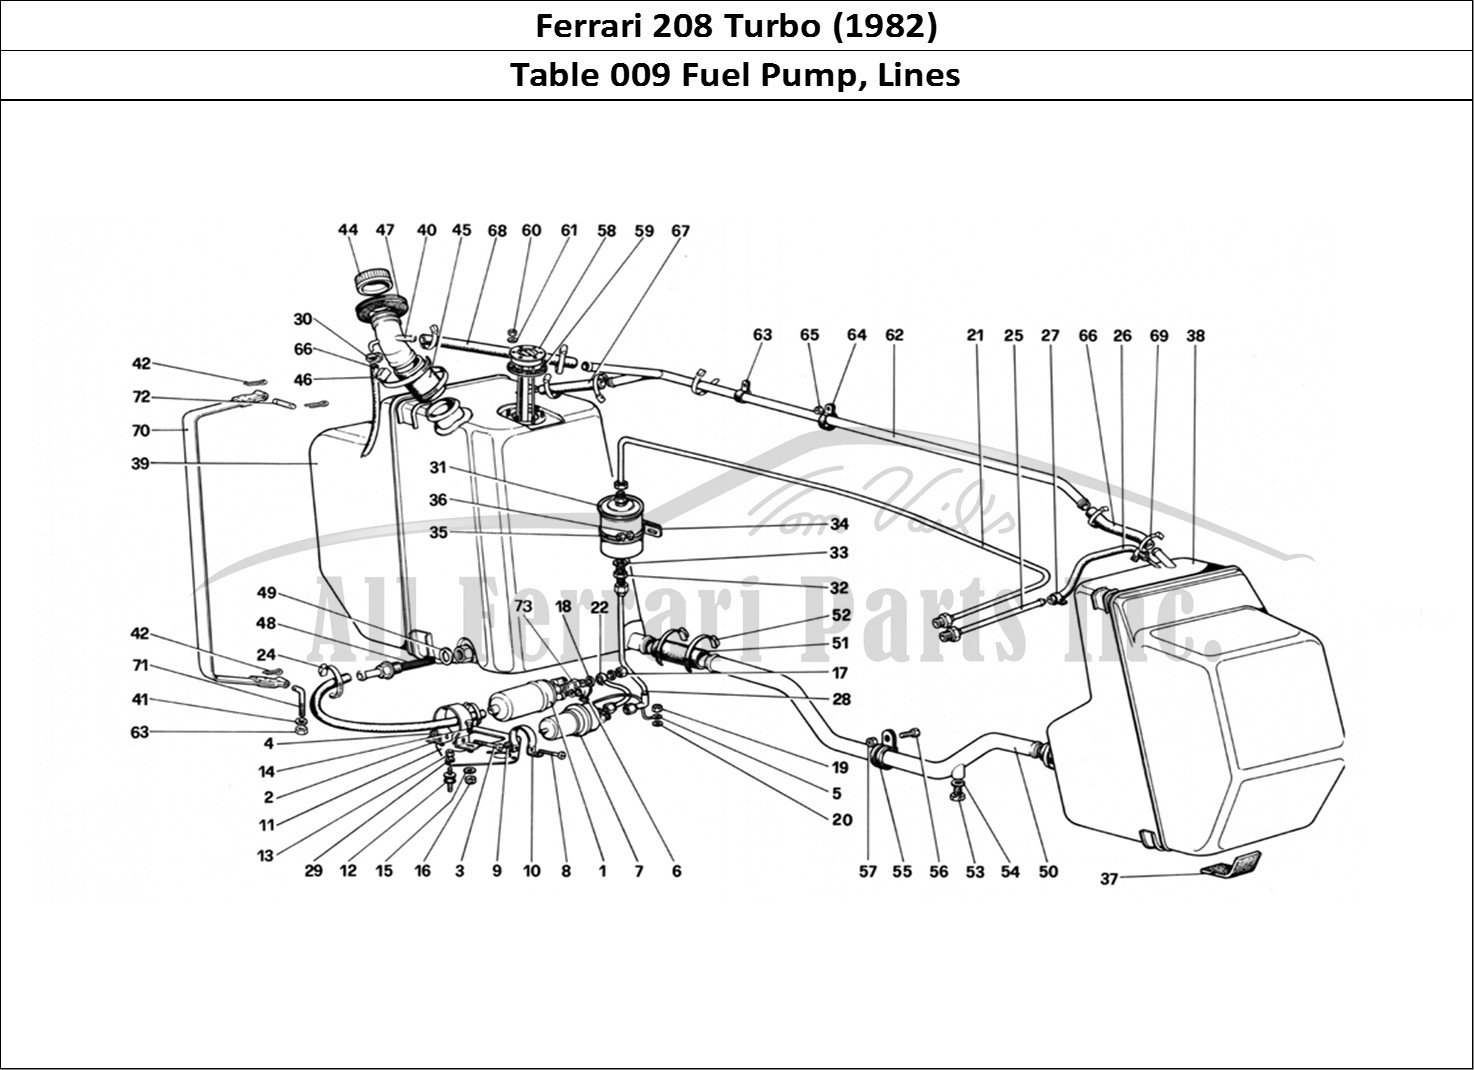 Ferrari Parts Ferrari 208 Turbo (1982) Page 009 Fuel Pump and Pipes